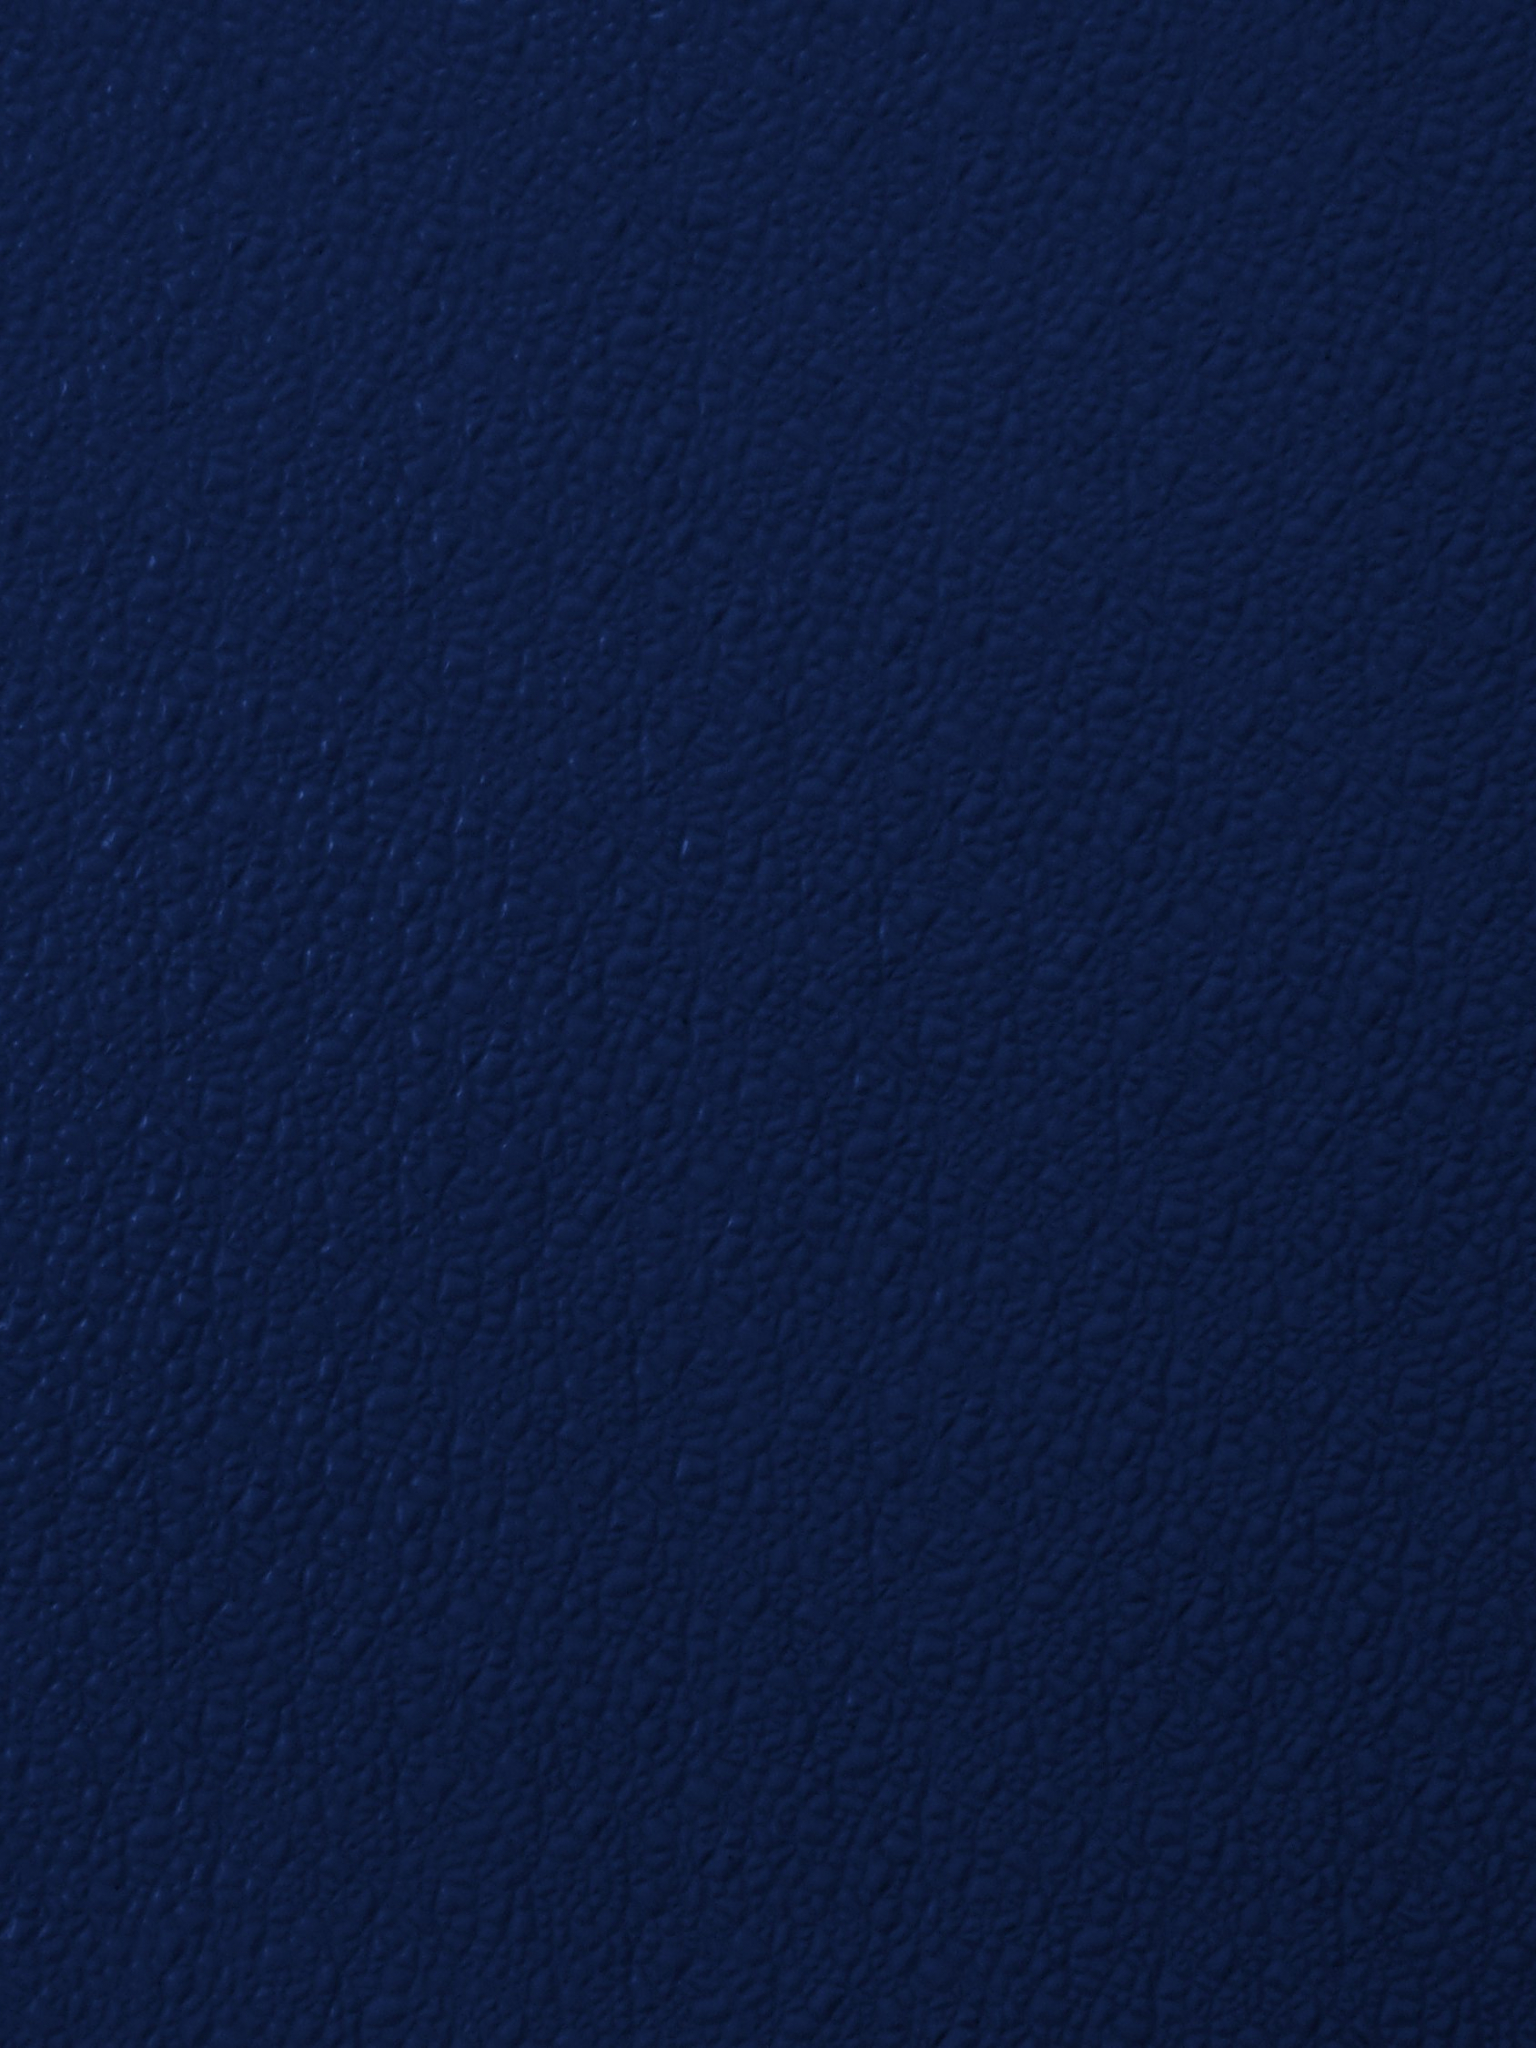 Dark Blue Background Texture Bumpy Navy Plastic